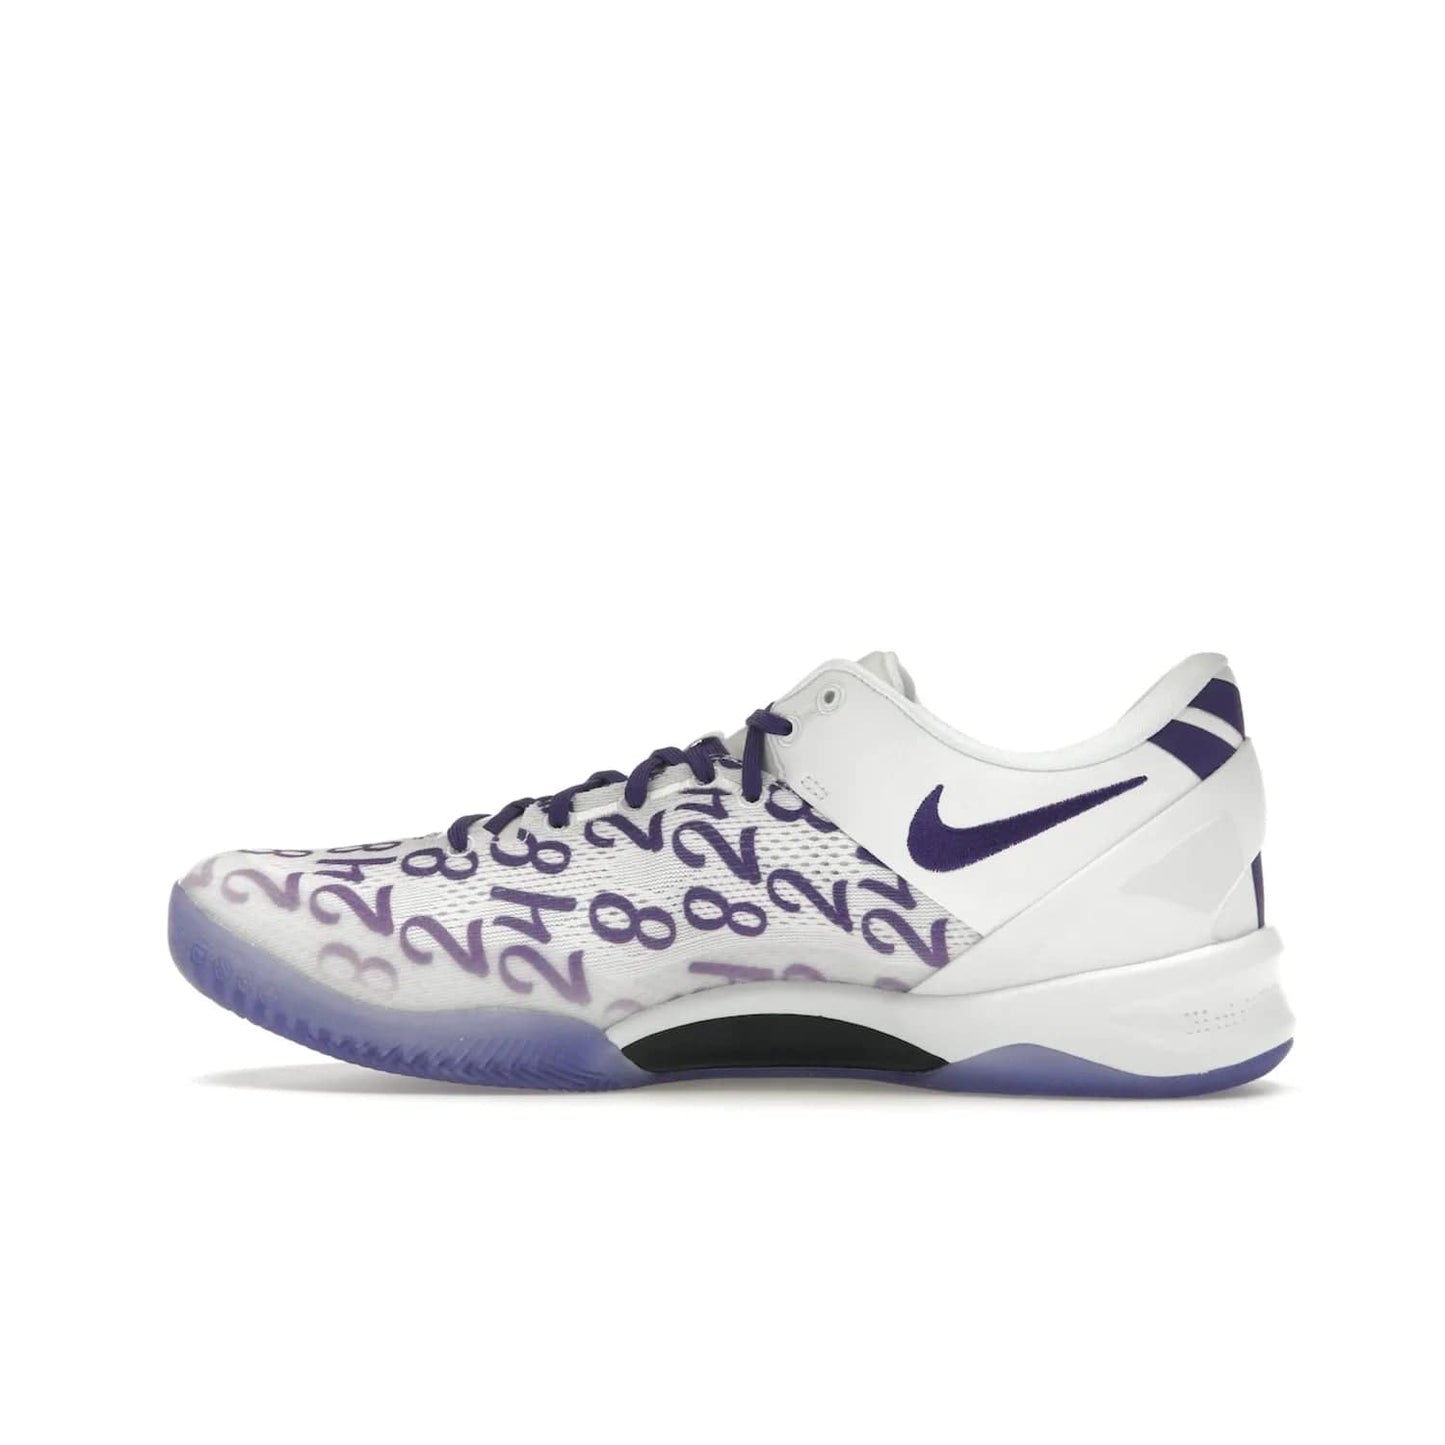 Nike Kobe 8 Protro Court Purple - Image 20 - Only at www.BallersClubKickz.com - 